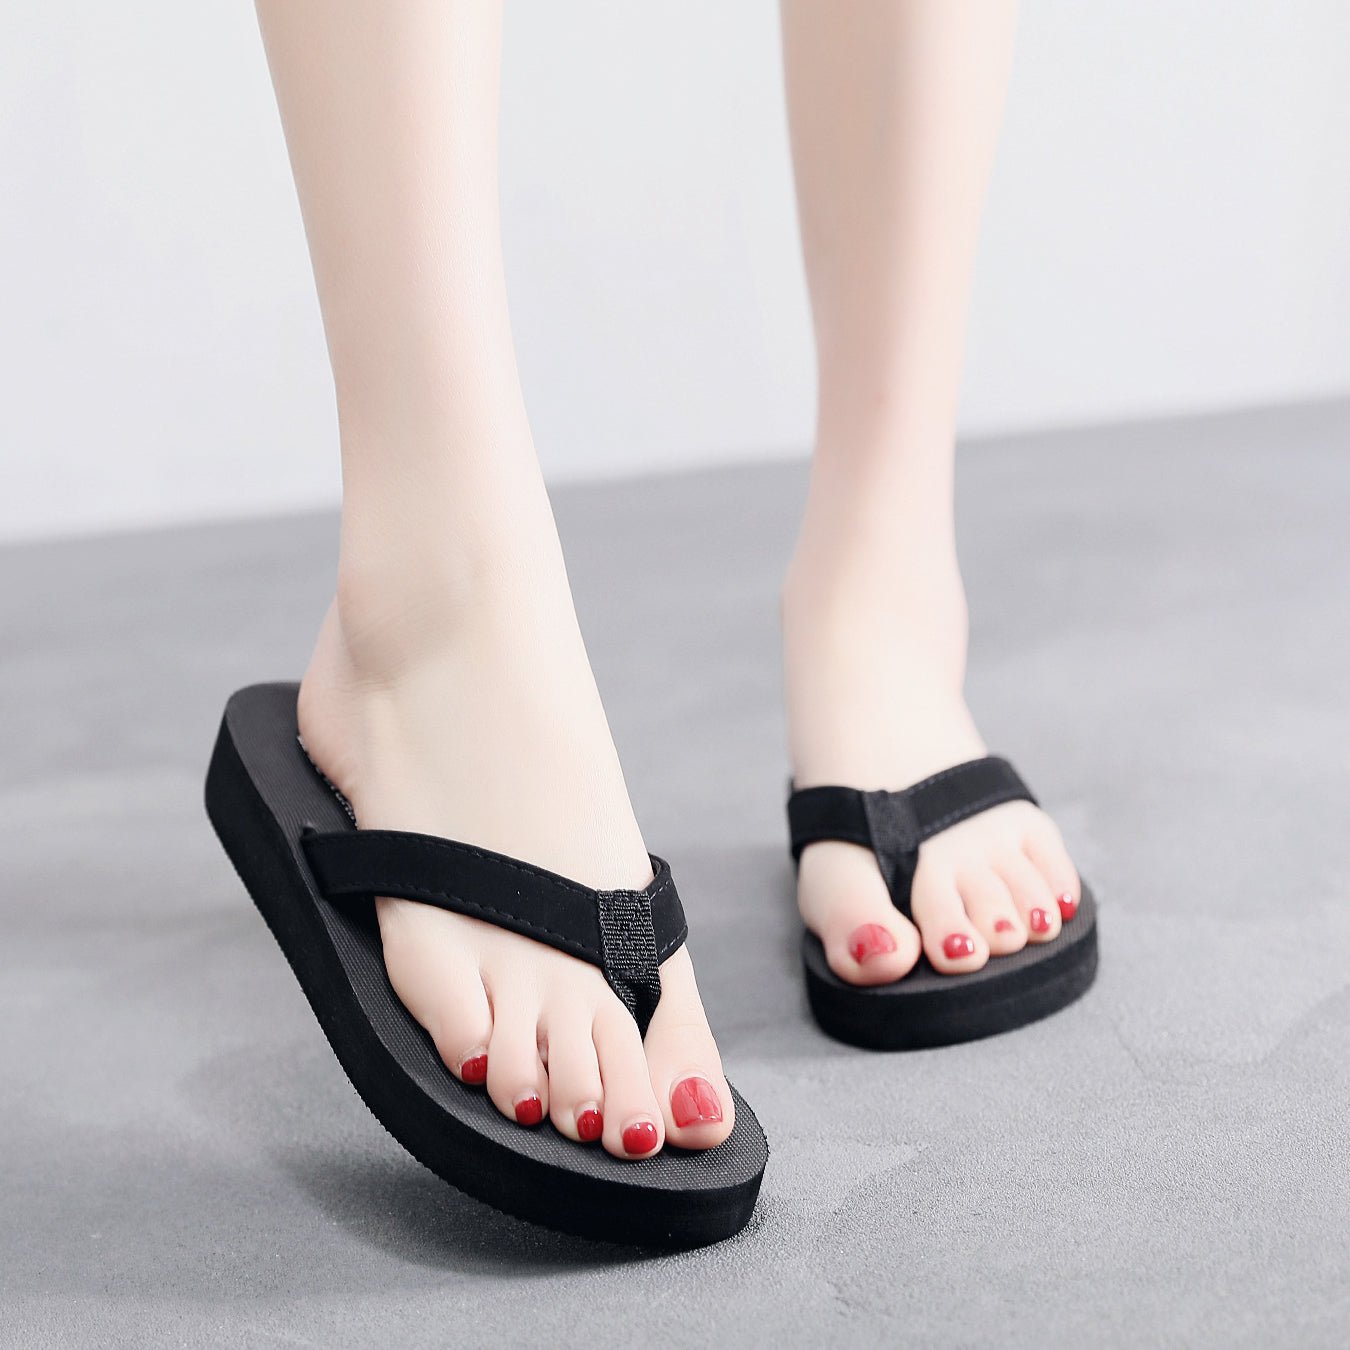 Velvet Straps Slippers - Boots BootiesShoesFlat Sandalsladies sandalsnon slip shoes